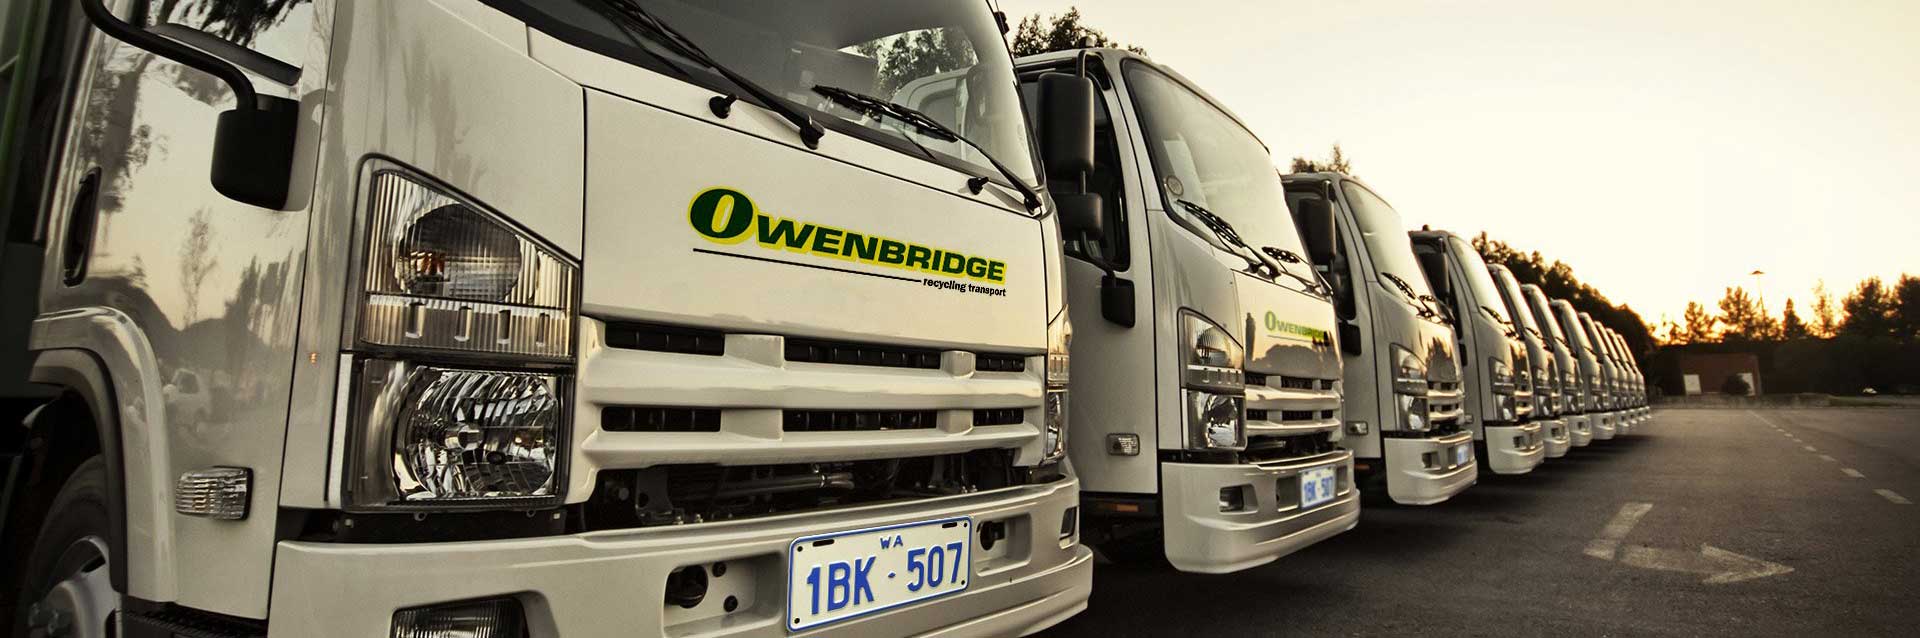 Owenbridge Logistics Recycling Transport